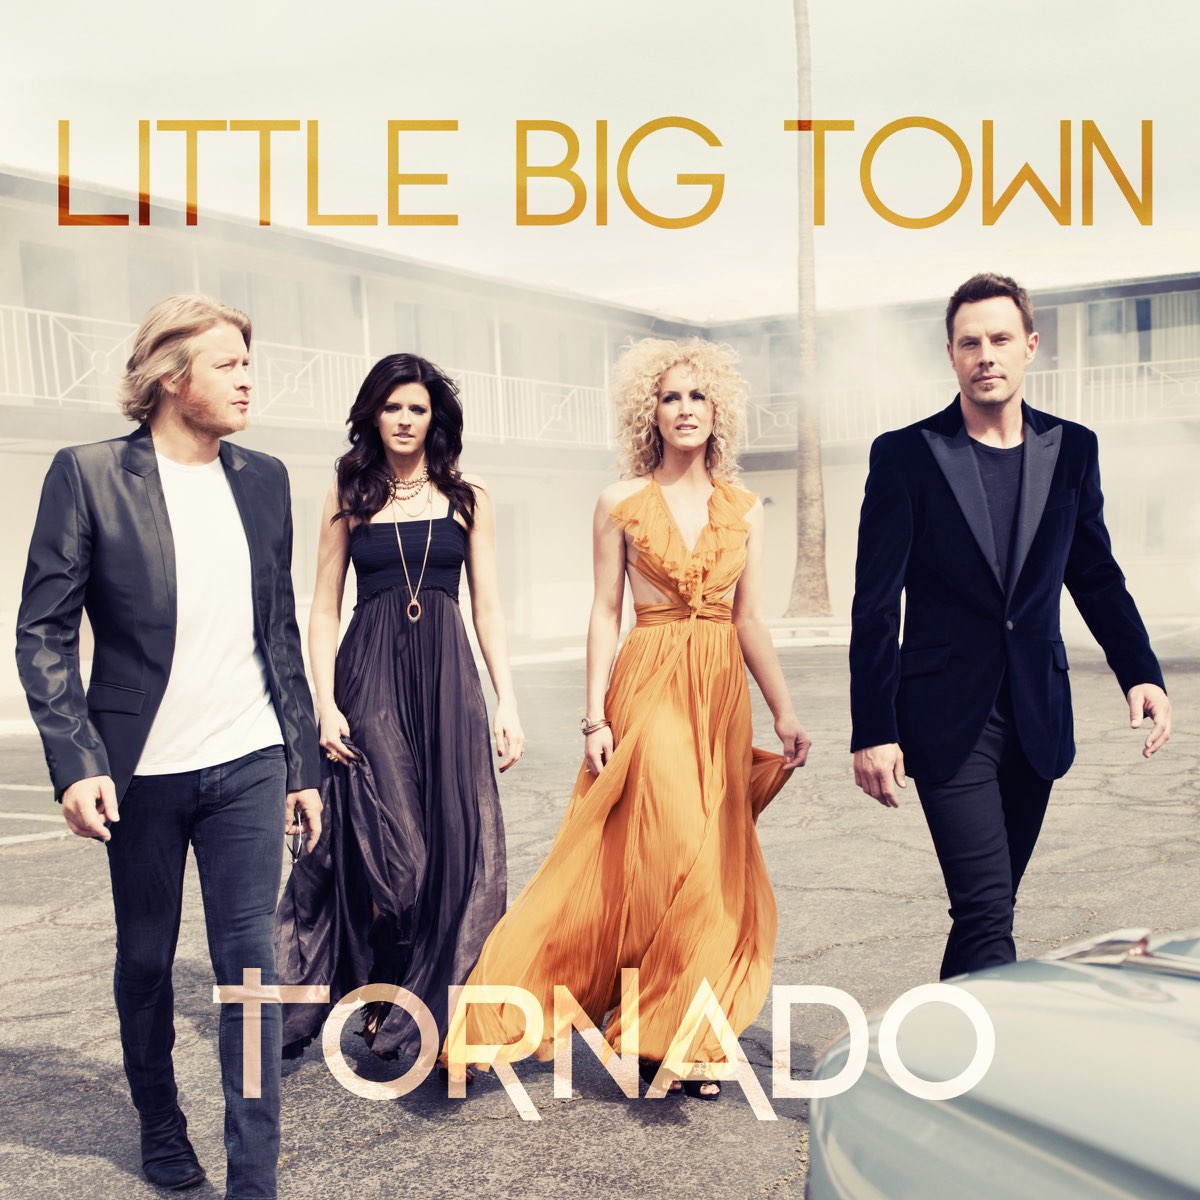 ‎Tornado by Little Big Town on Apple Music